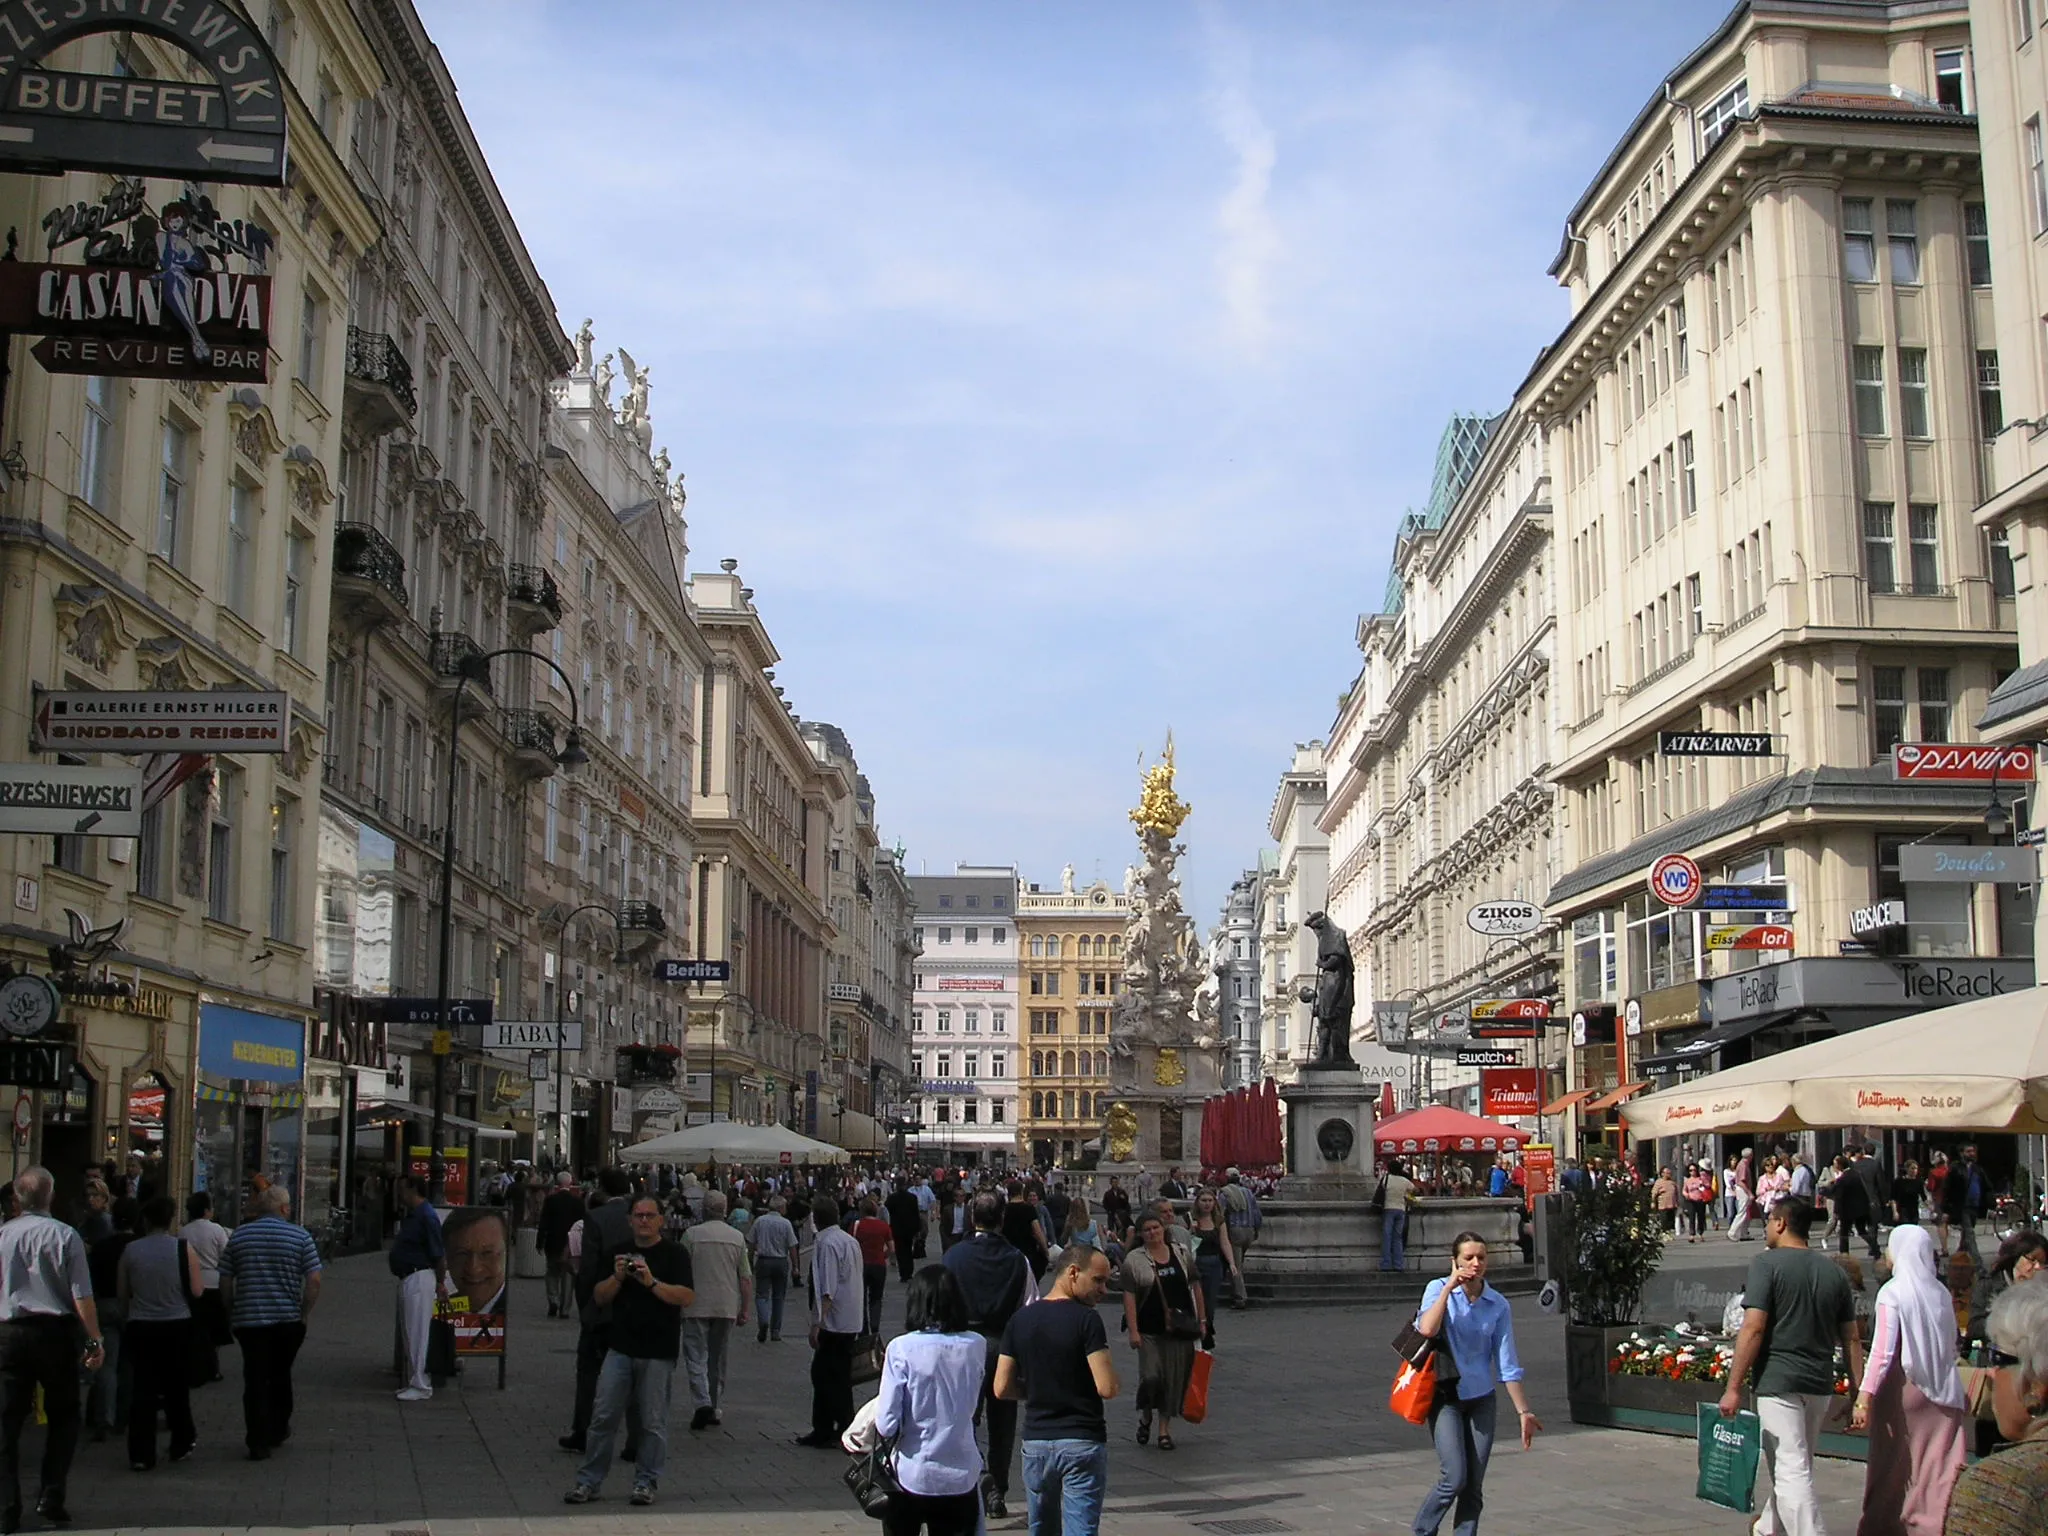 Immagine di Vienna